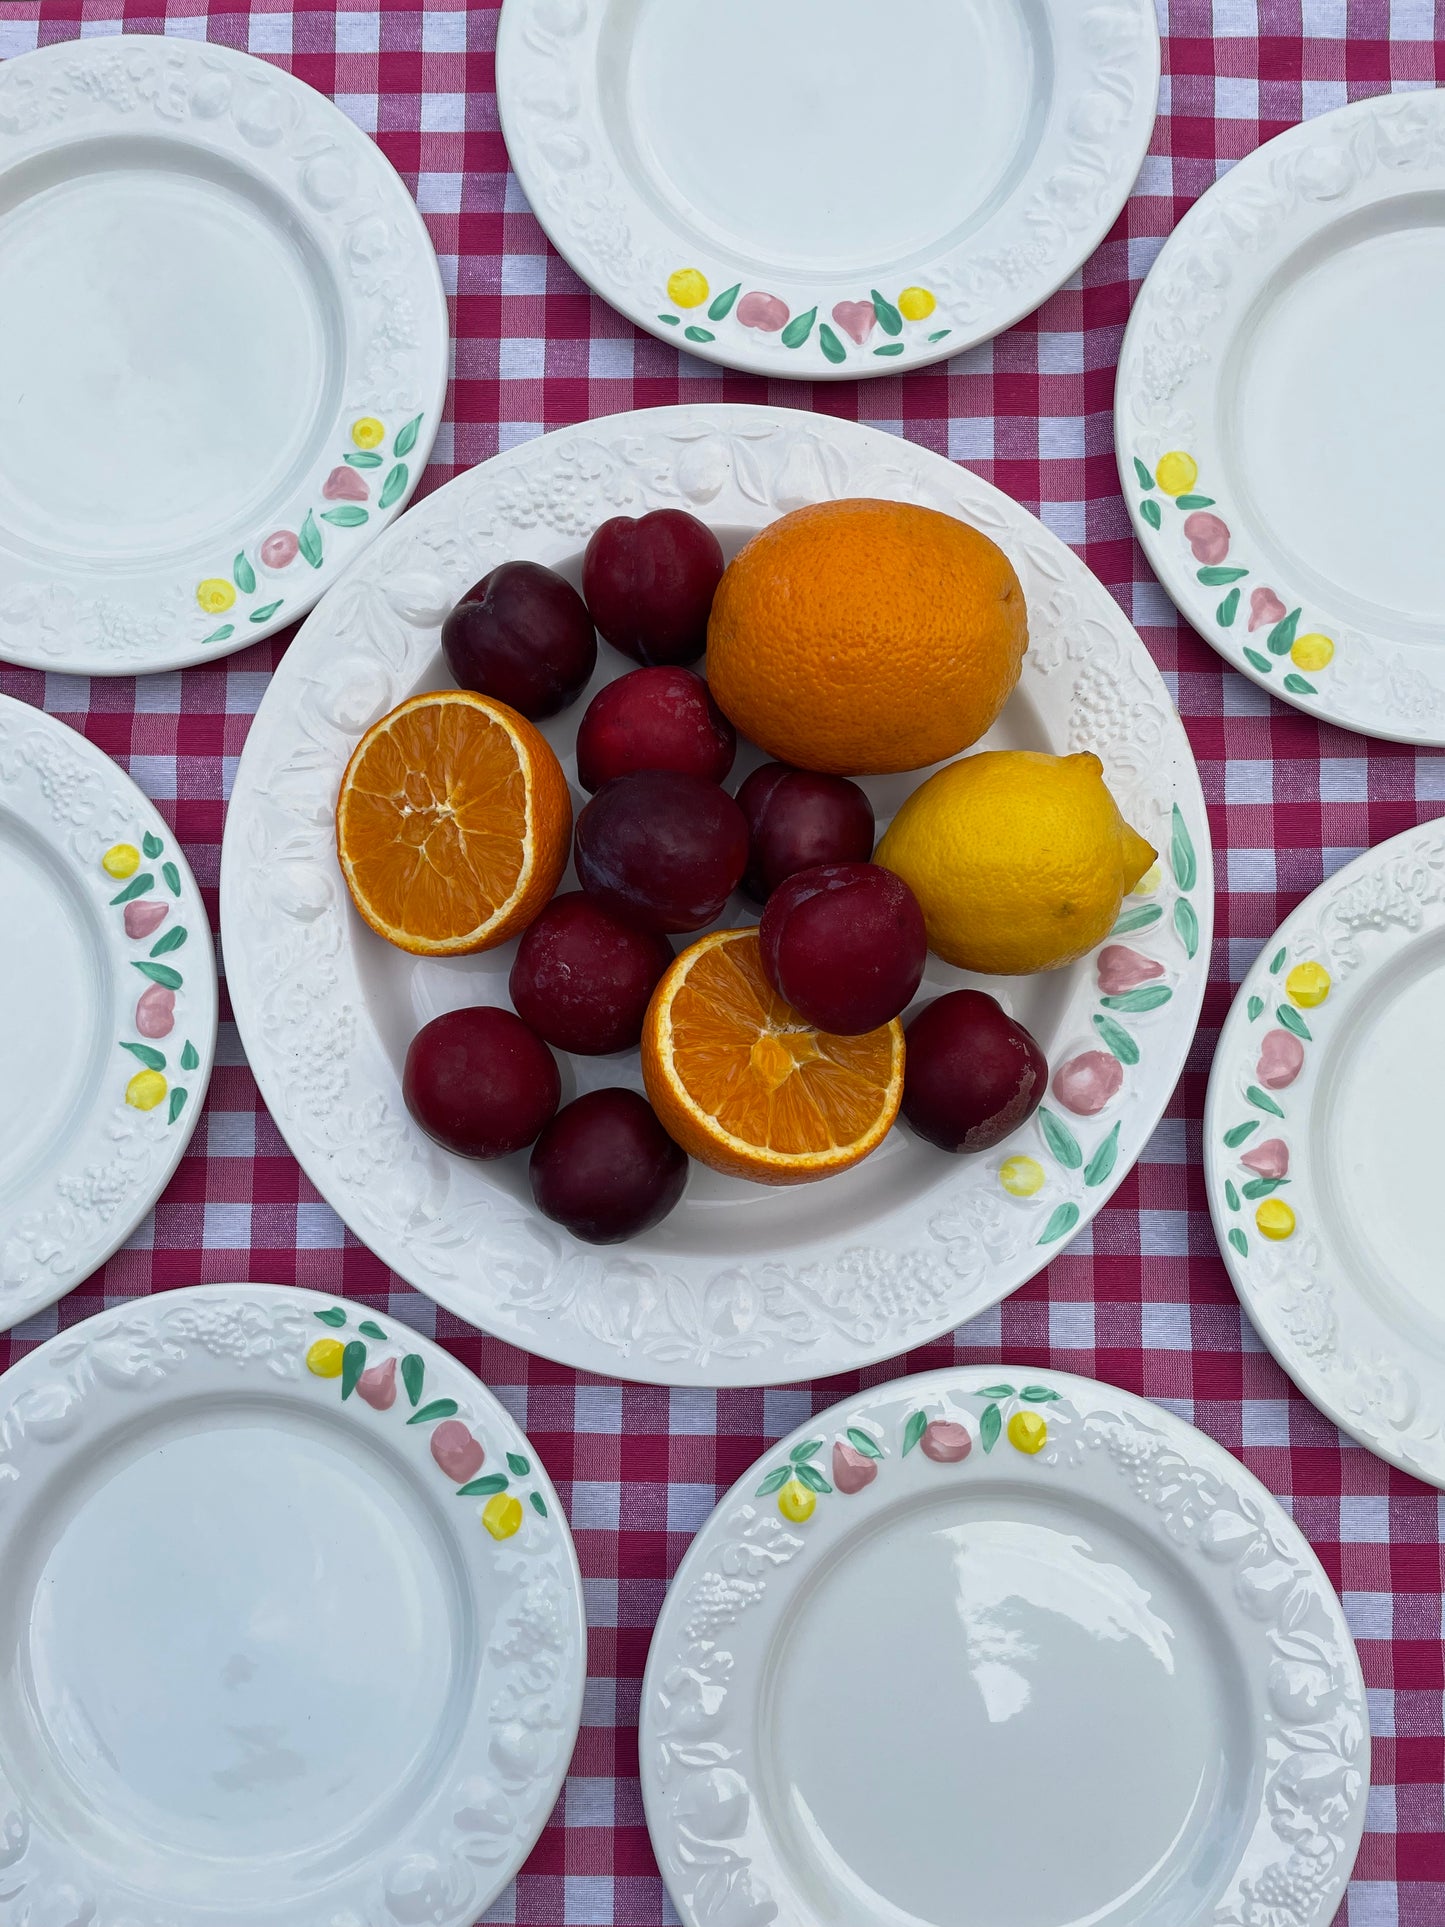 13 assiettes à dessert et 2 grands plats ronds décor fruits Made in Italy